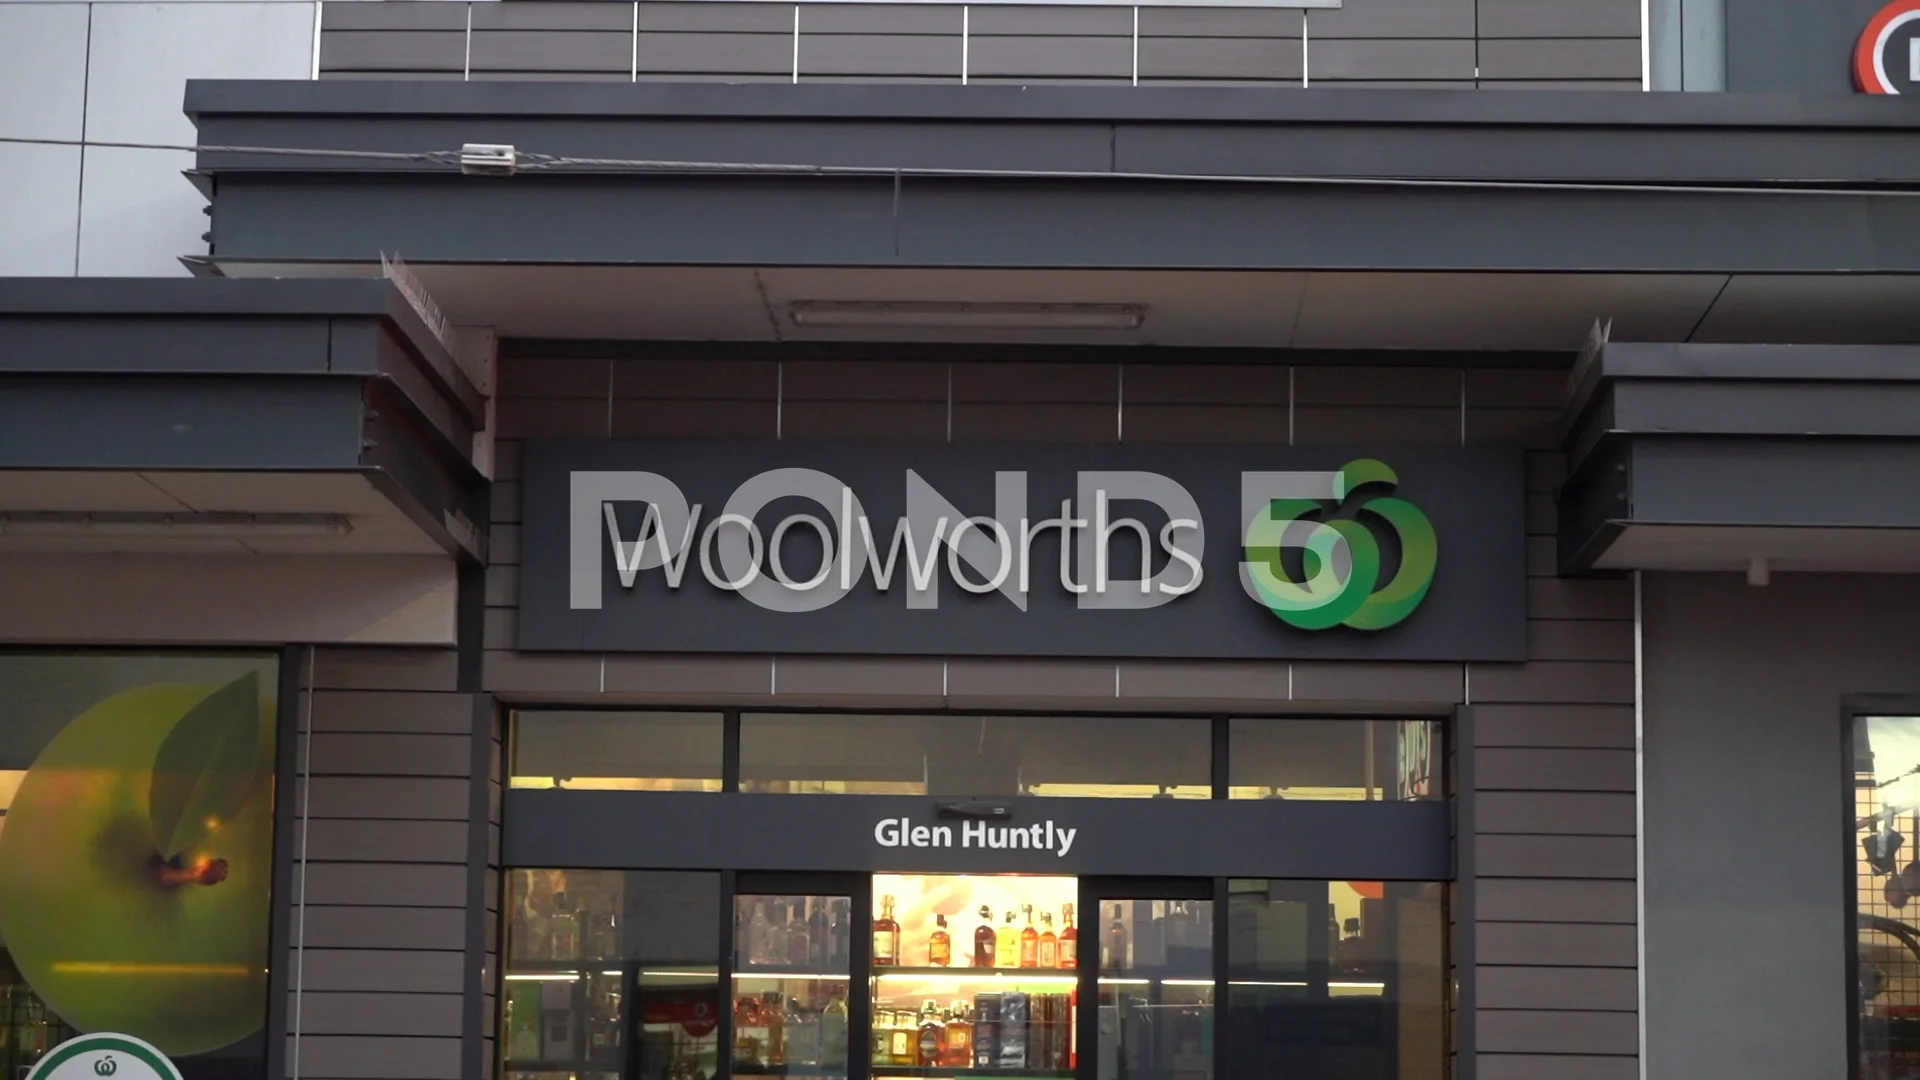 modern storefront